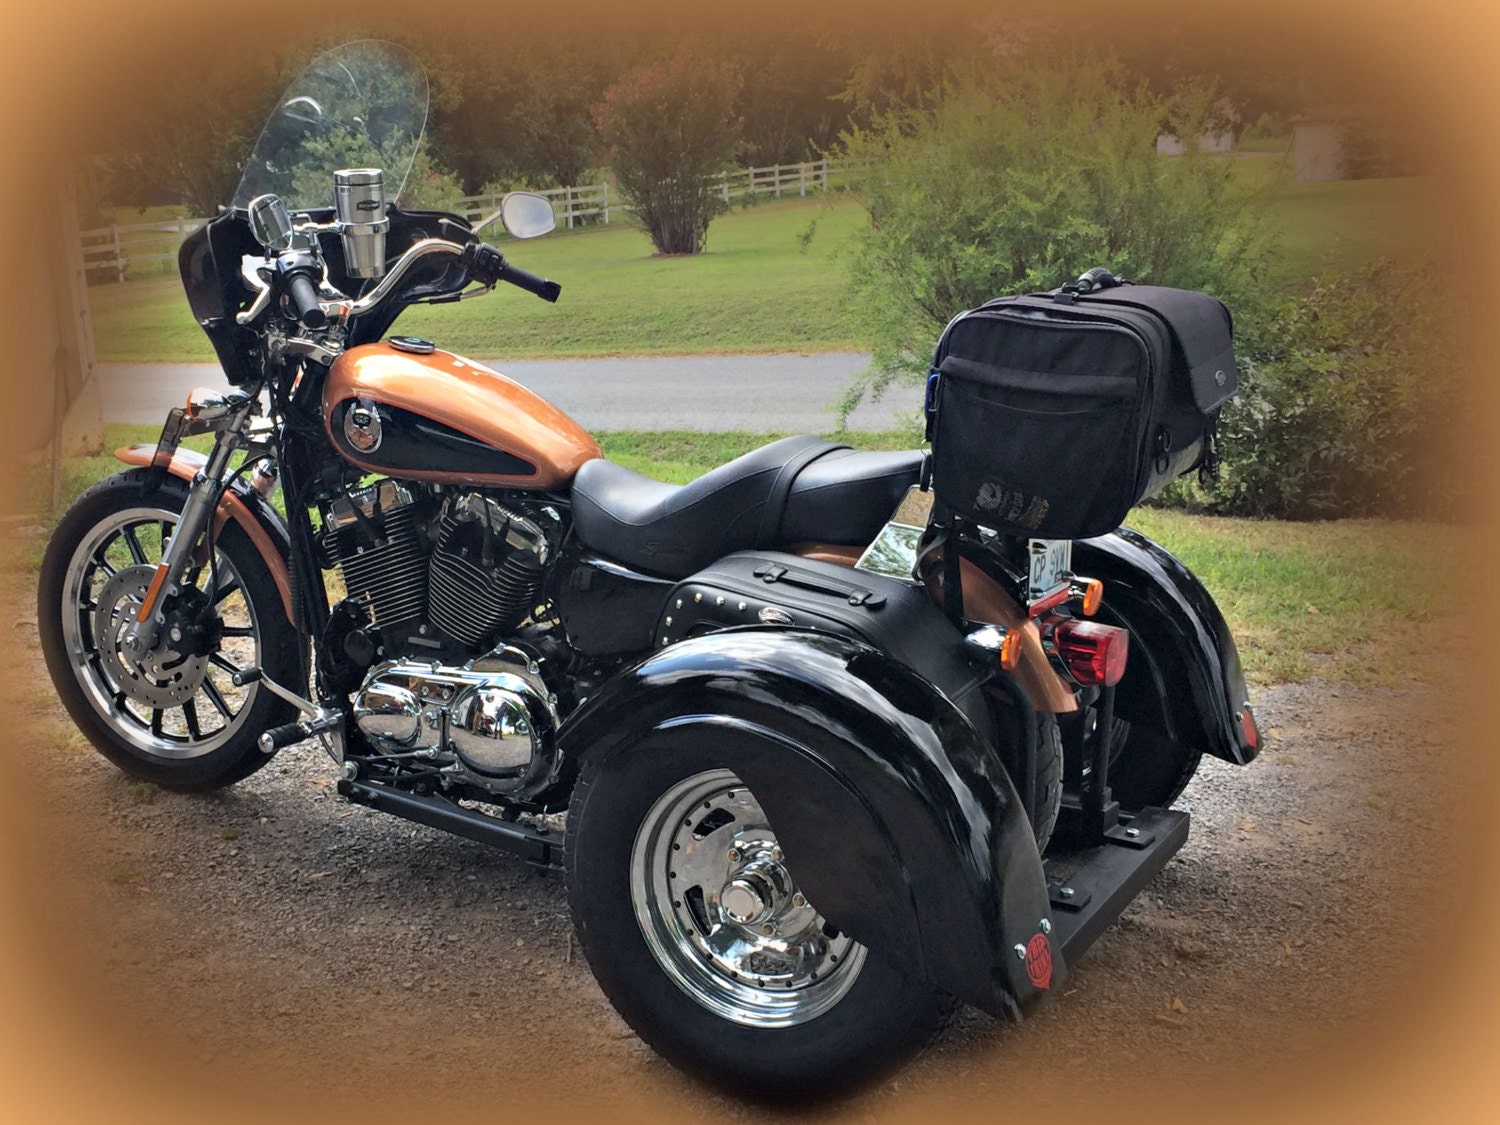 Trip Trike Jr motorcycle trike kit trike kit for your by TripTrike